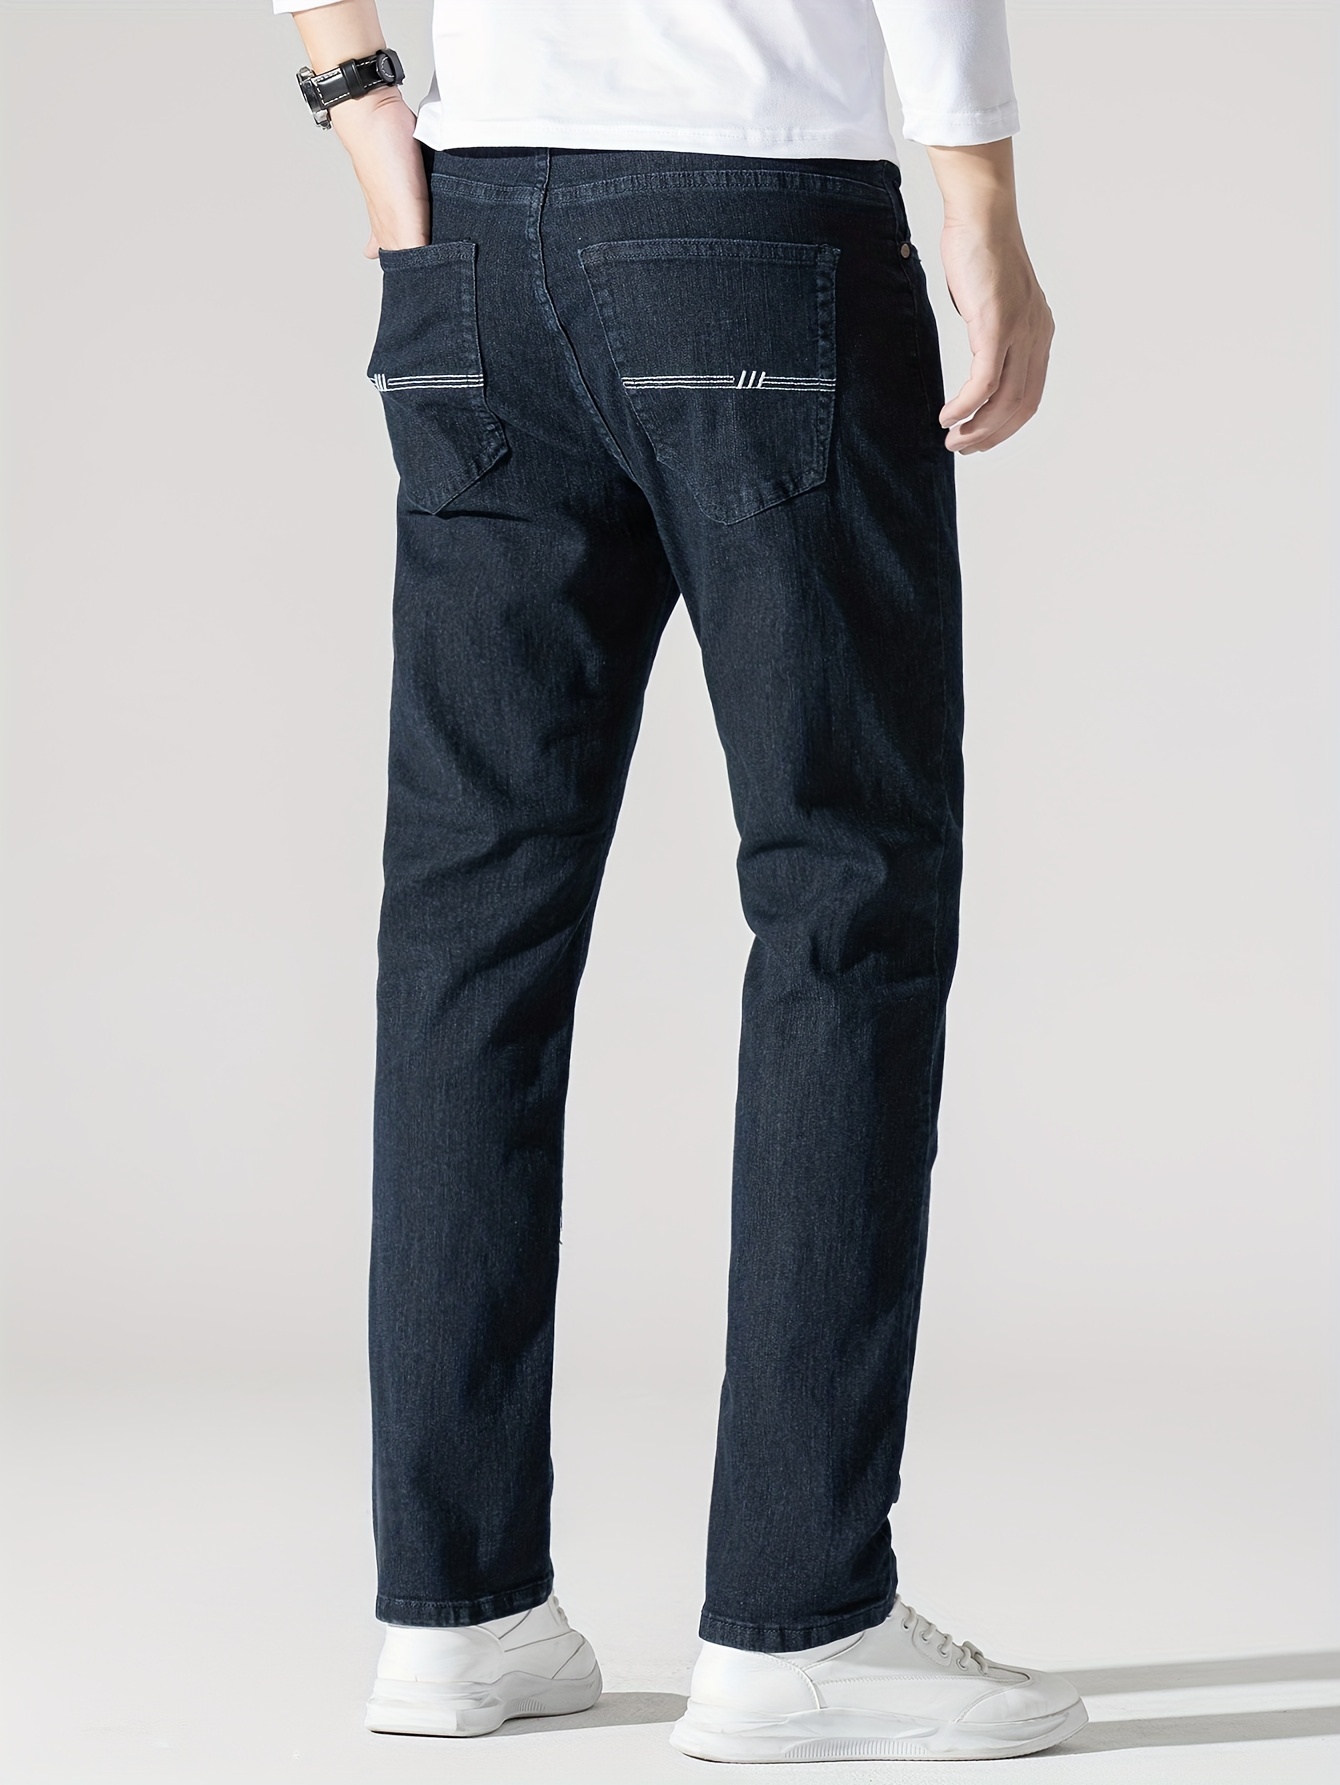 XIULAIQ New Hombres Moda Jeans Business Casual Estiramiento Slim